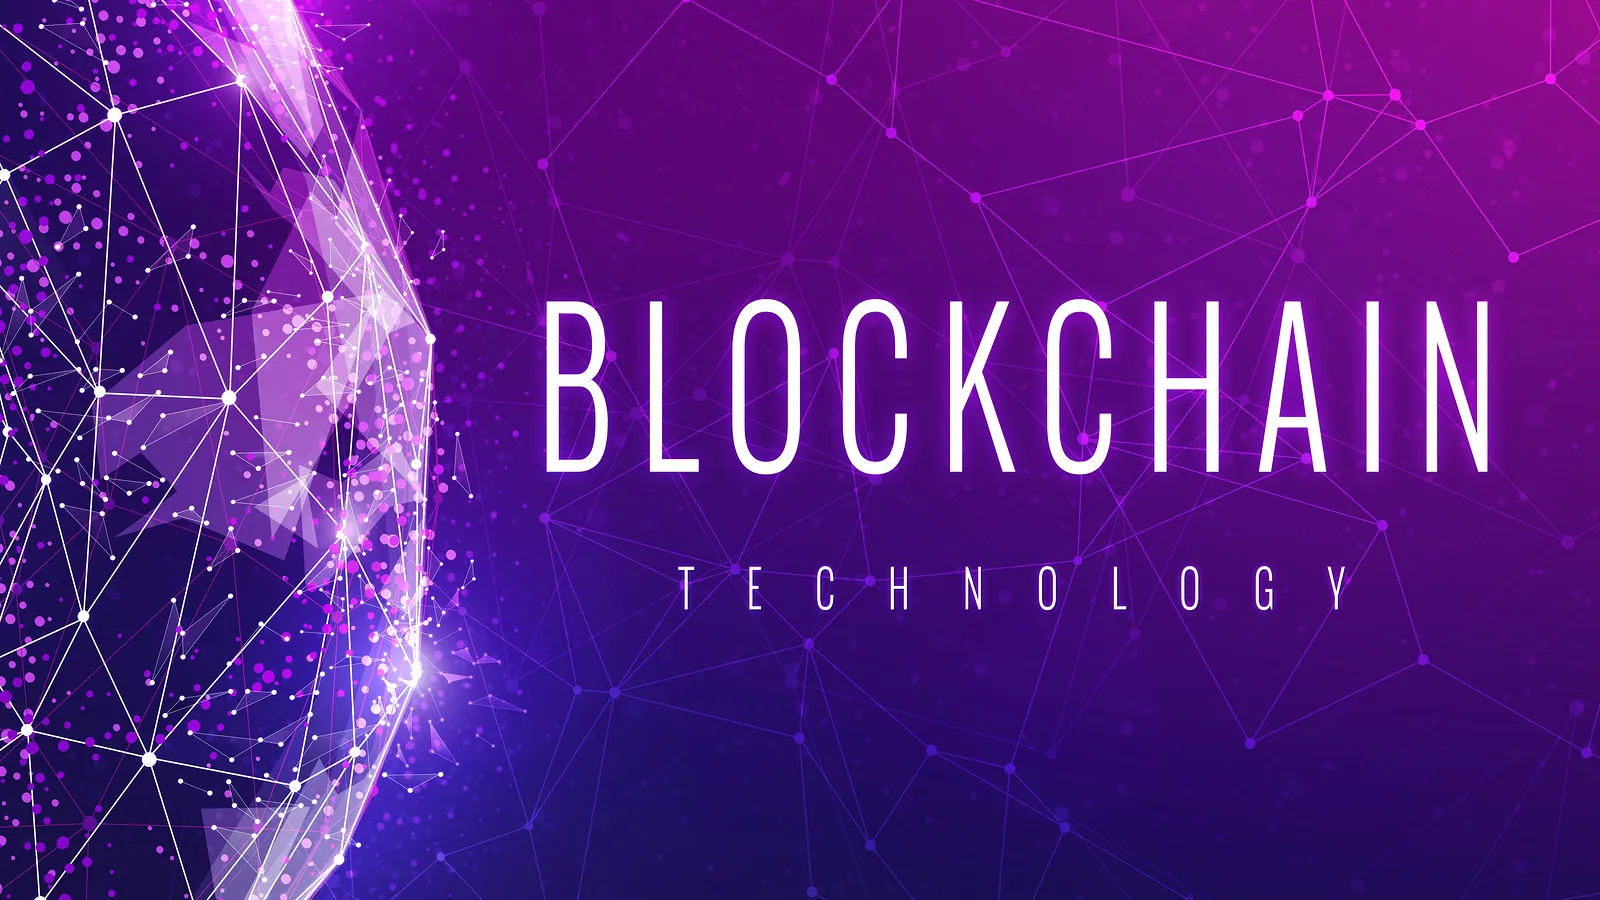 Blockchain technology implementation